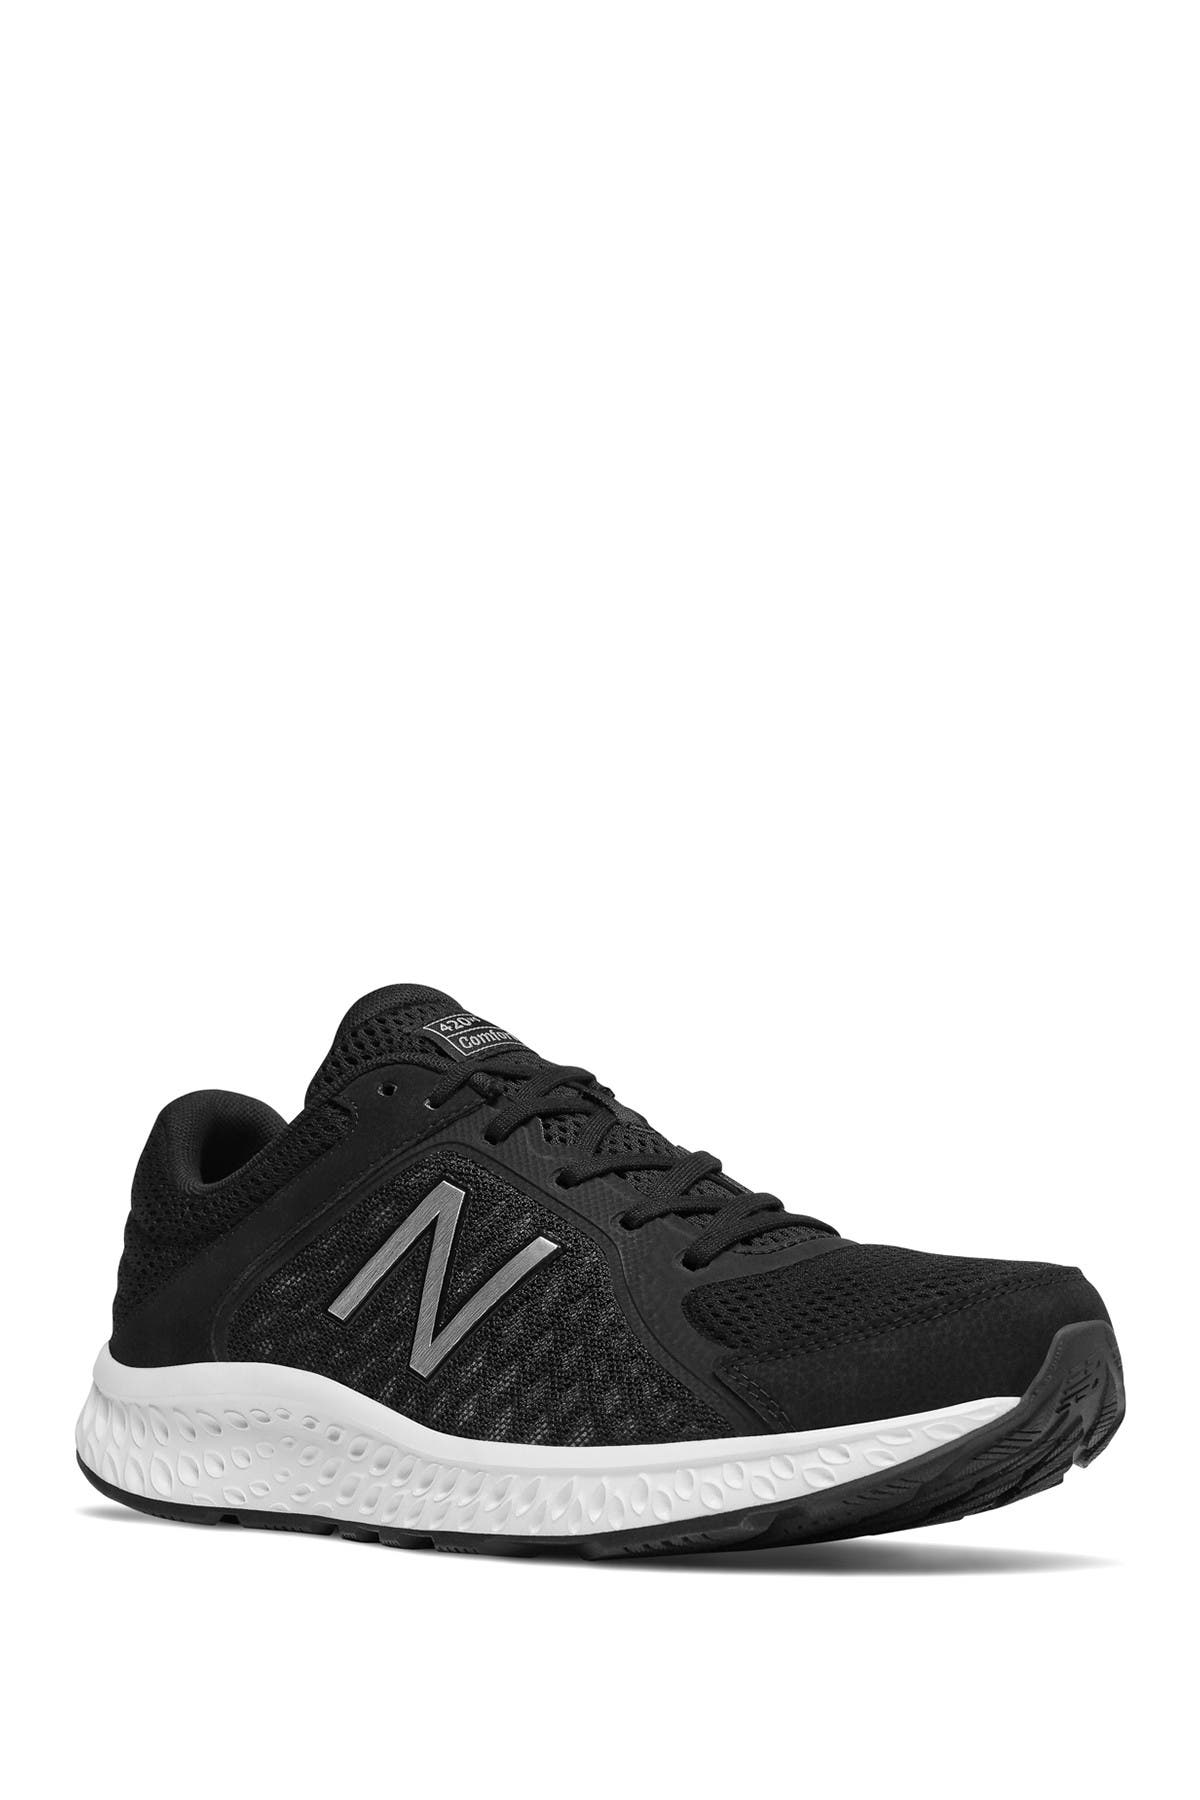 New Balance | 420v4 Running Shoe 